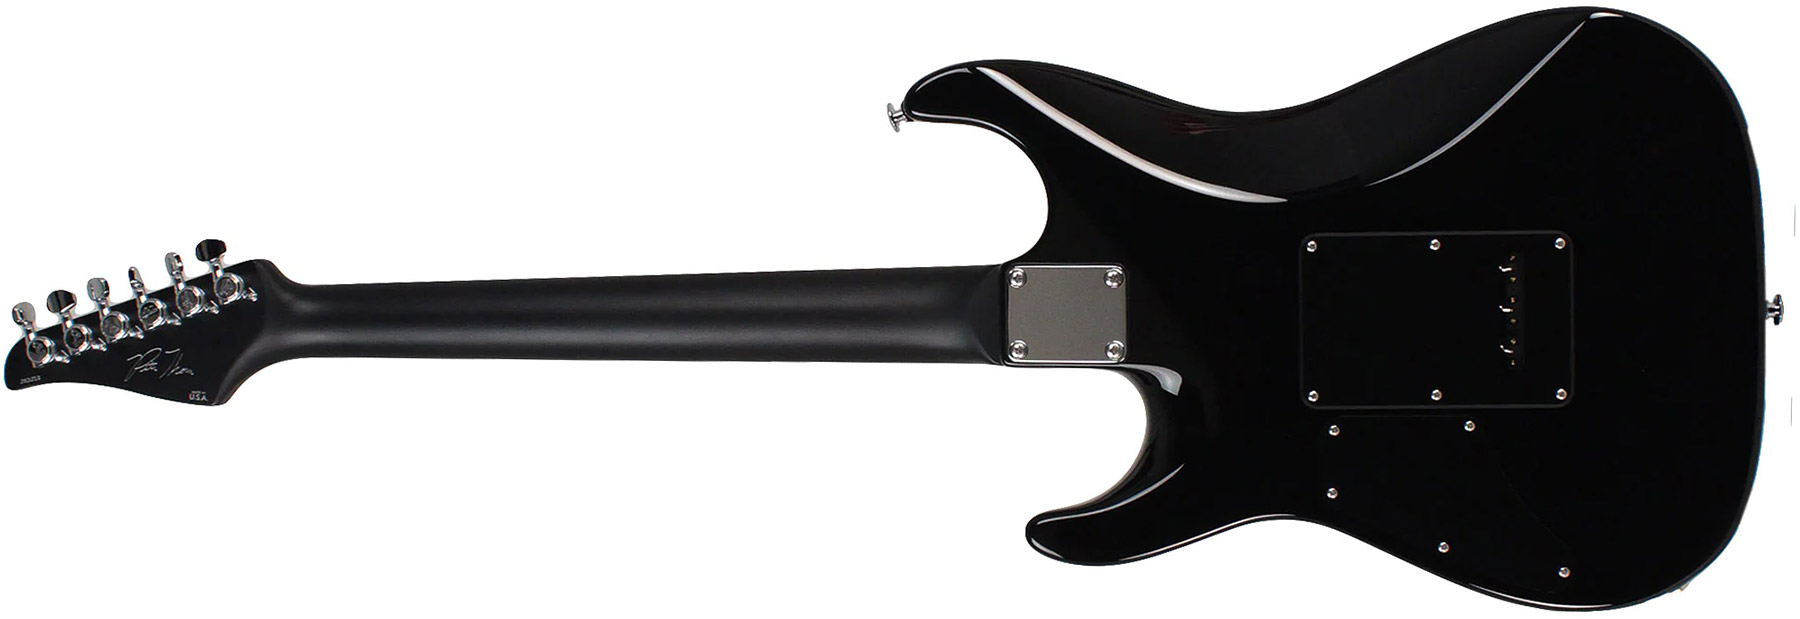 Suhr Pete Thorn Standard 01-sig-0012 Signature 2h Trem Rw - Ocean Turquoise Metallic - Str shape electric guitar - Variation 1